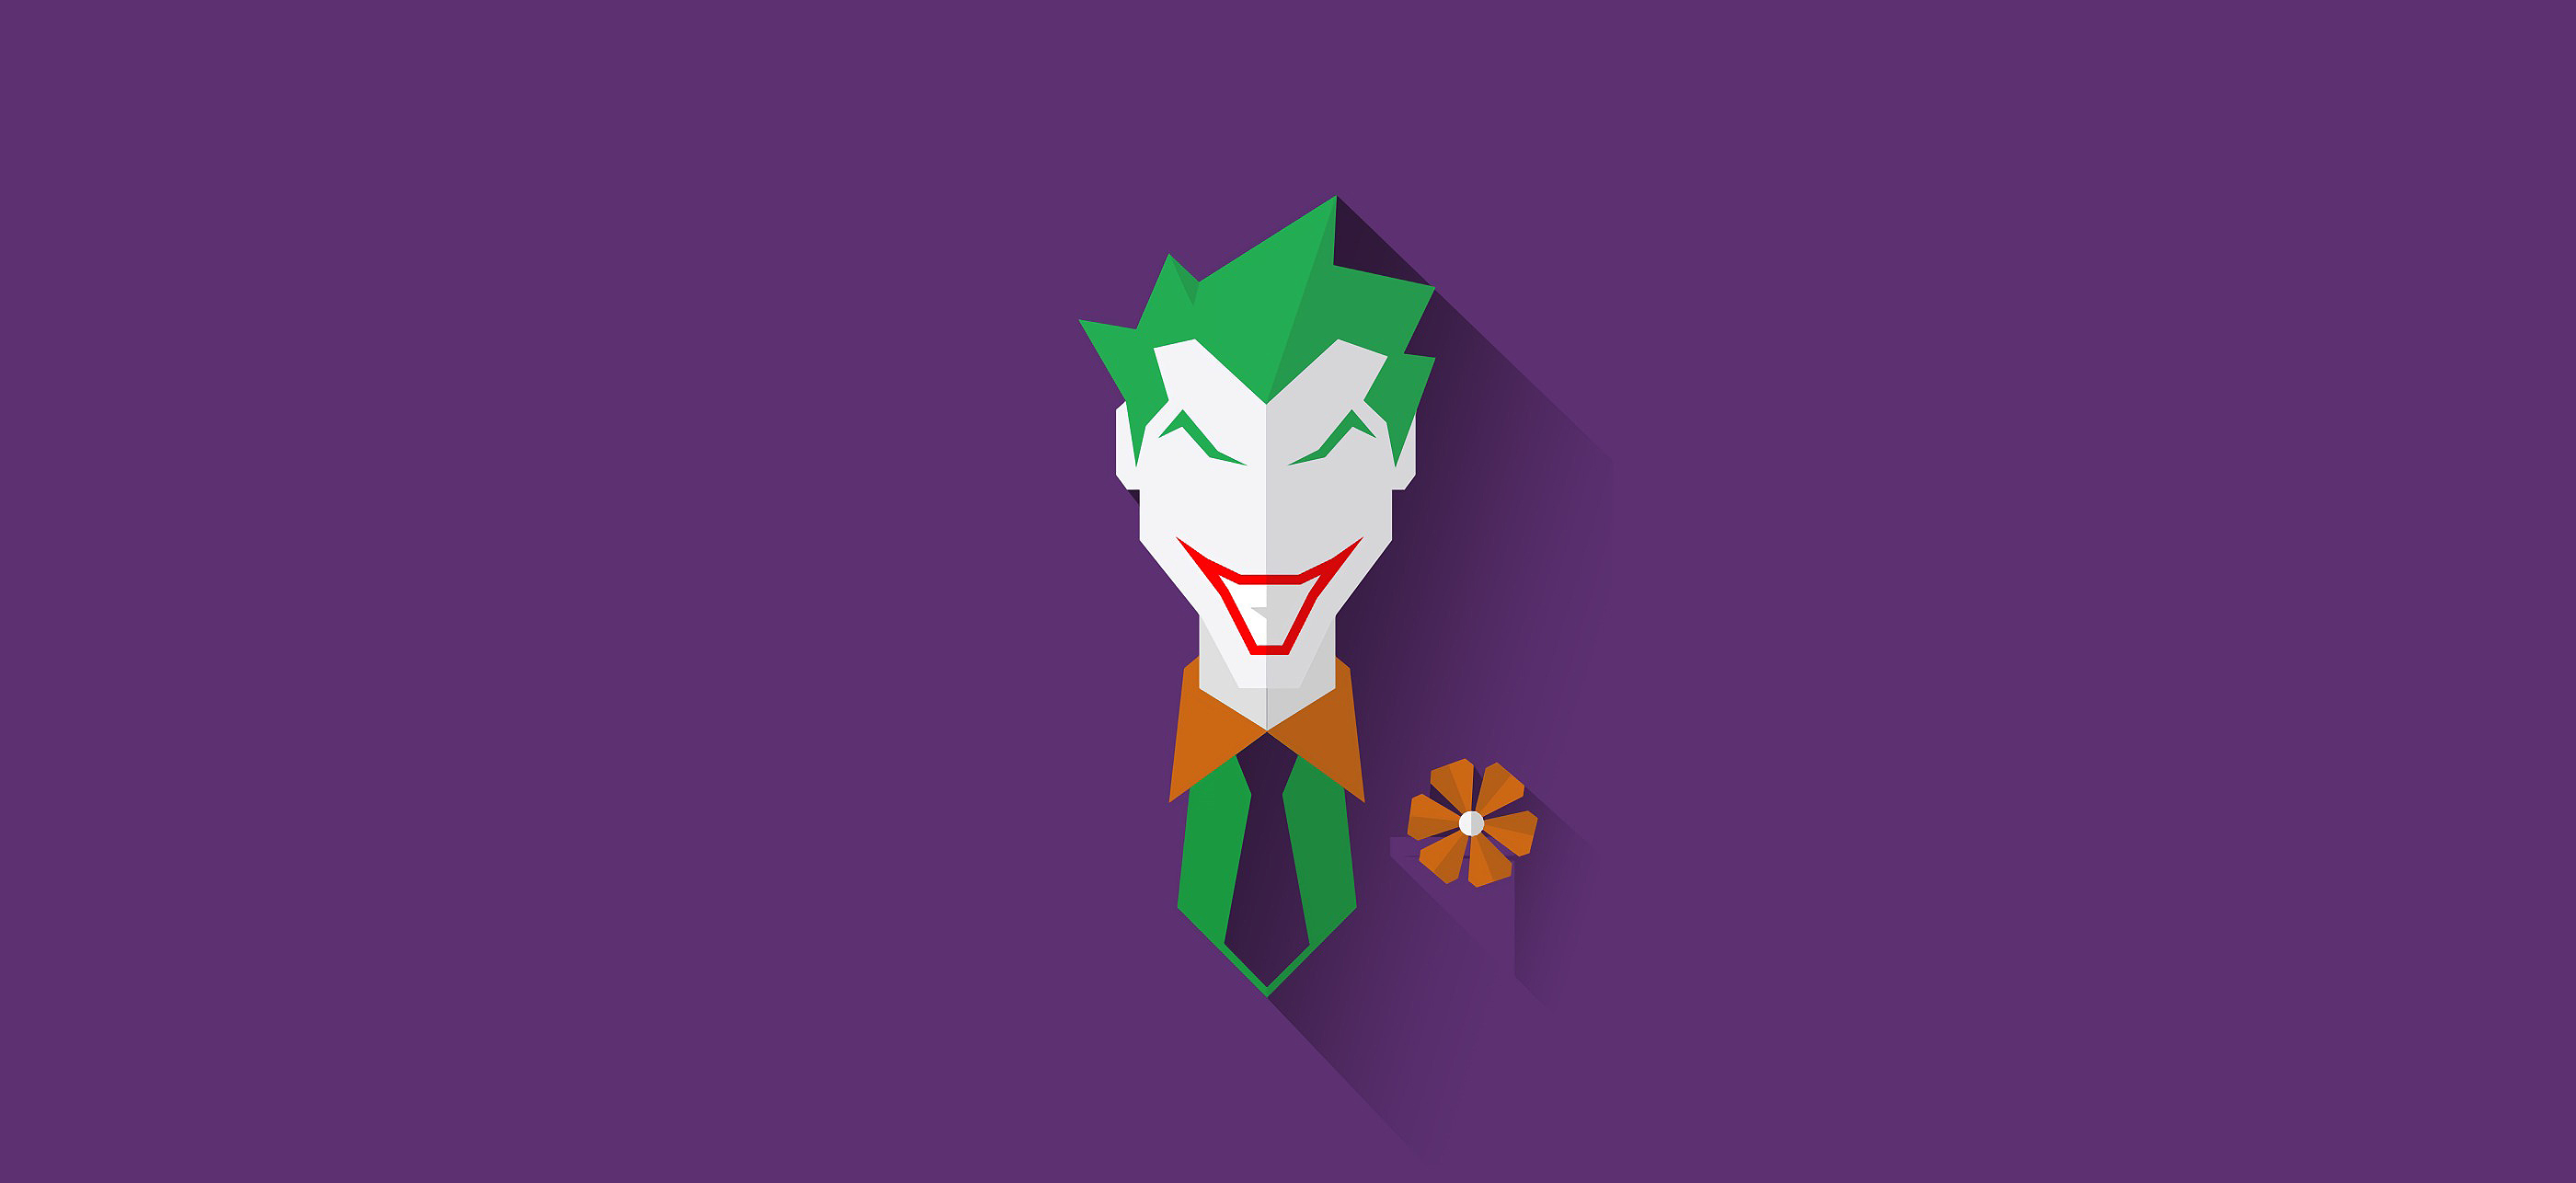 for mac download Joker